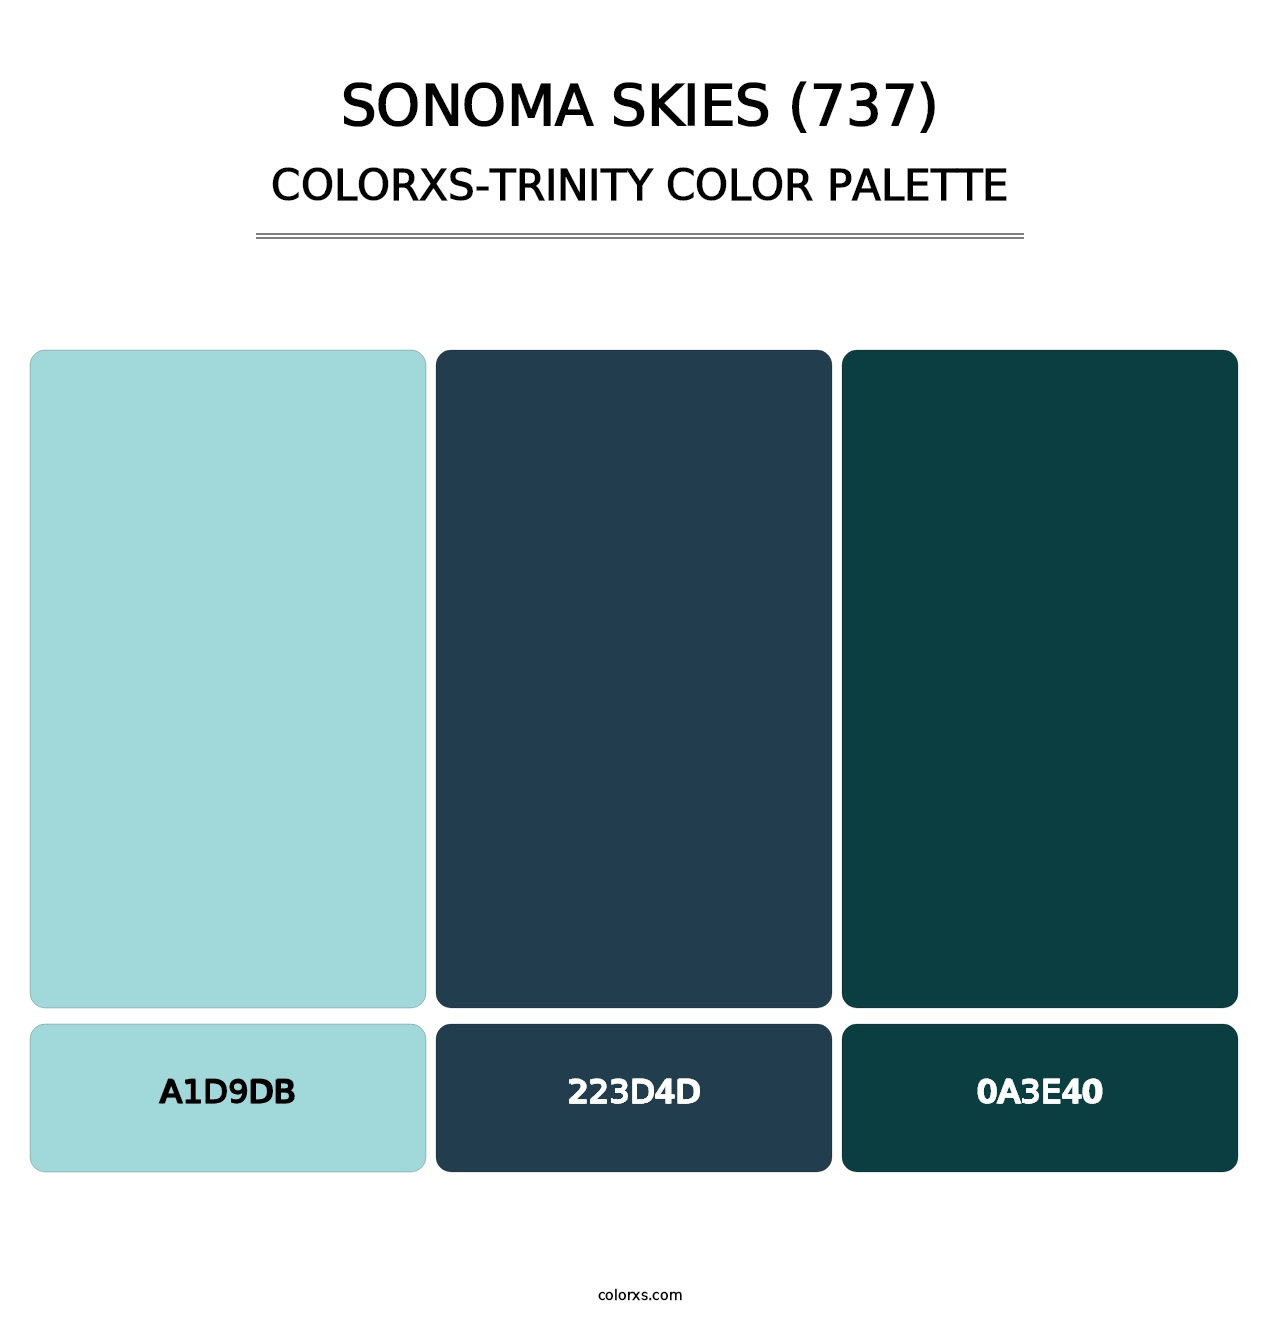 Sonoma Skies (737) - Colorxs Trinity Palette